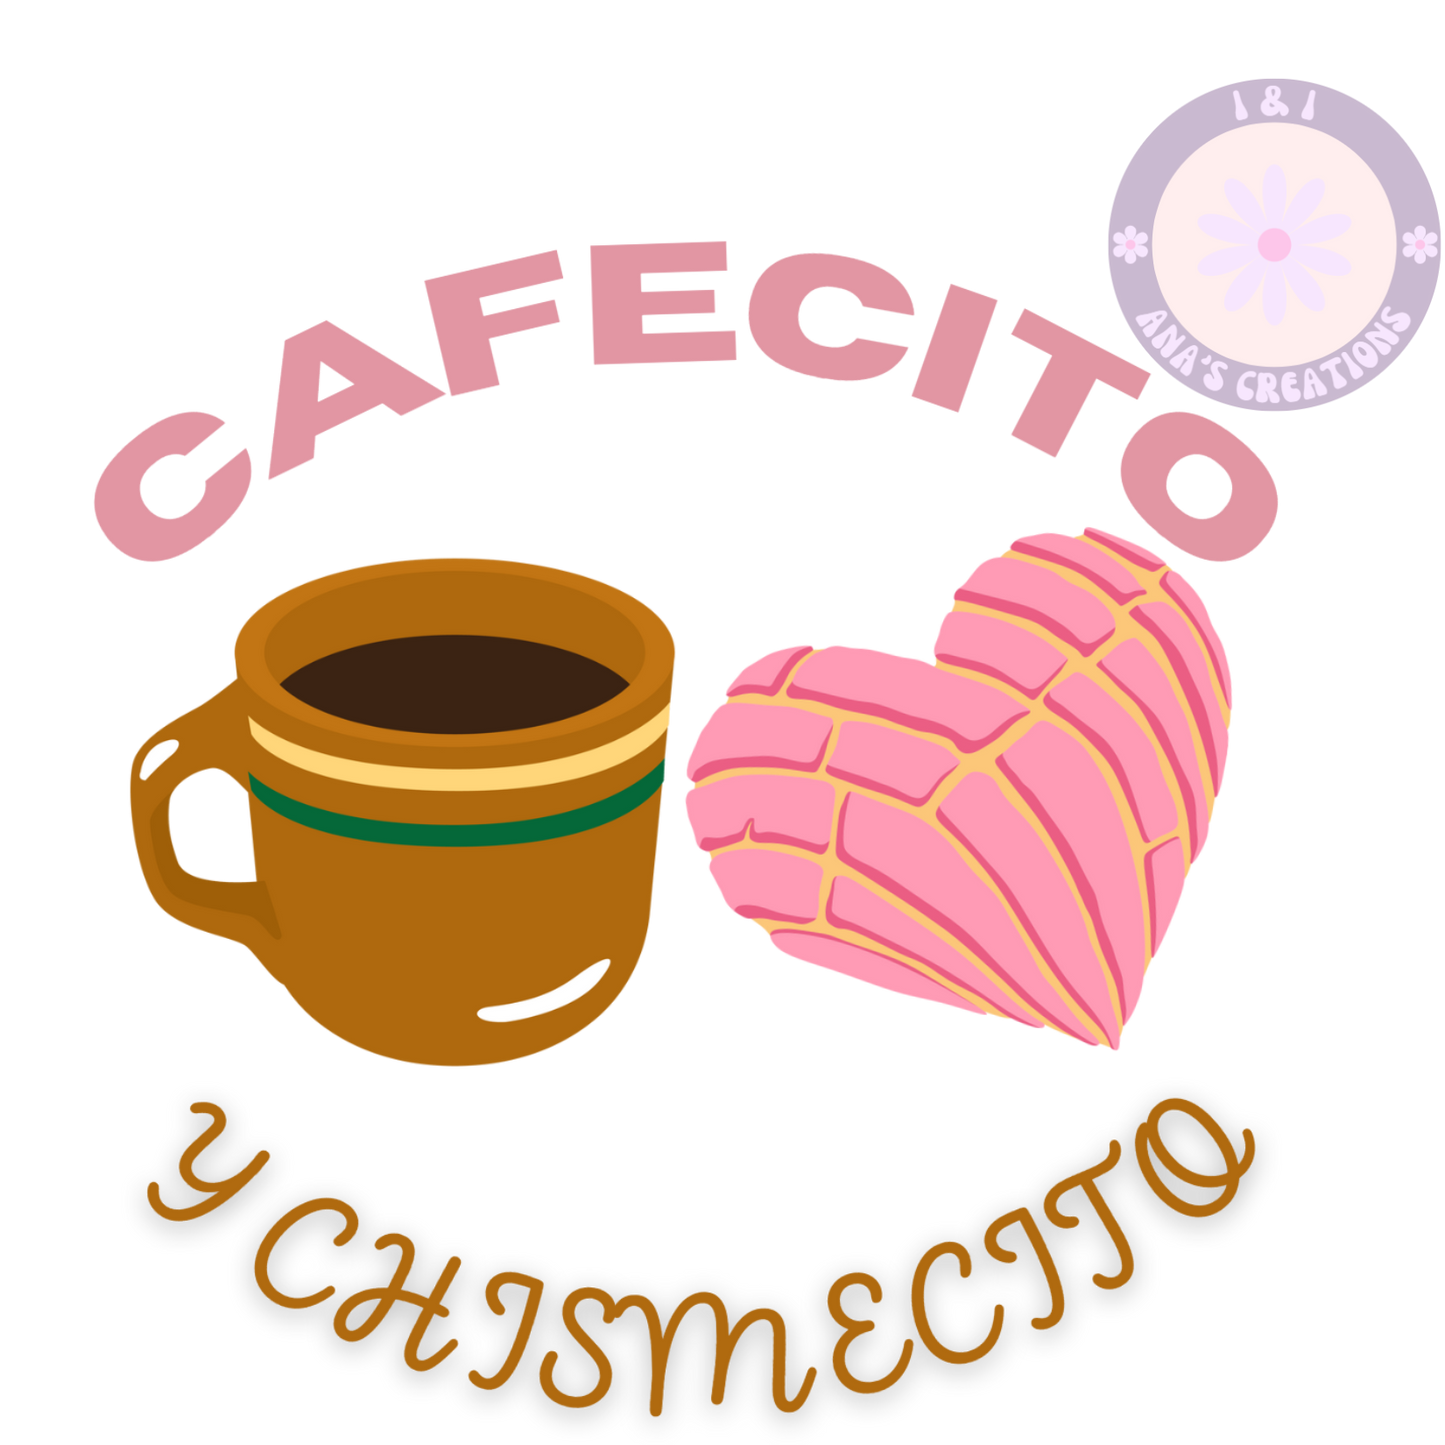 Cafecito I Cafecito cups I Cups I Cafecito time I Cafecito y Chisme I Cafe  I Personalize I Gifts I Tasitas